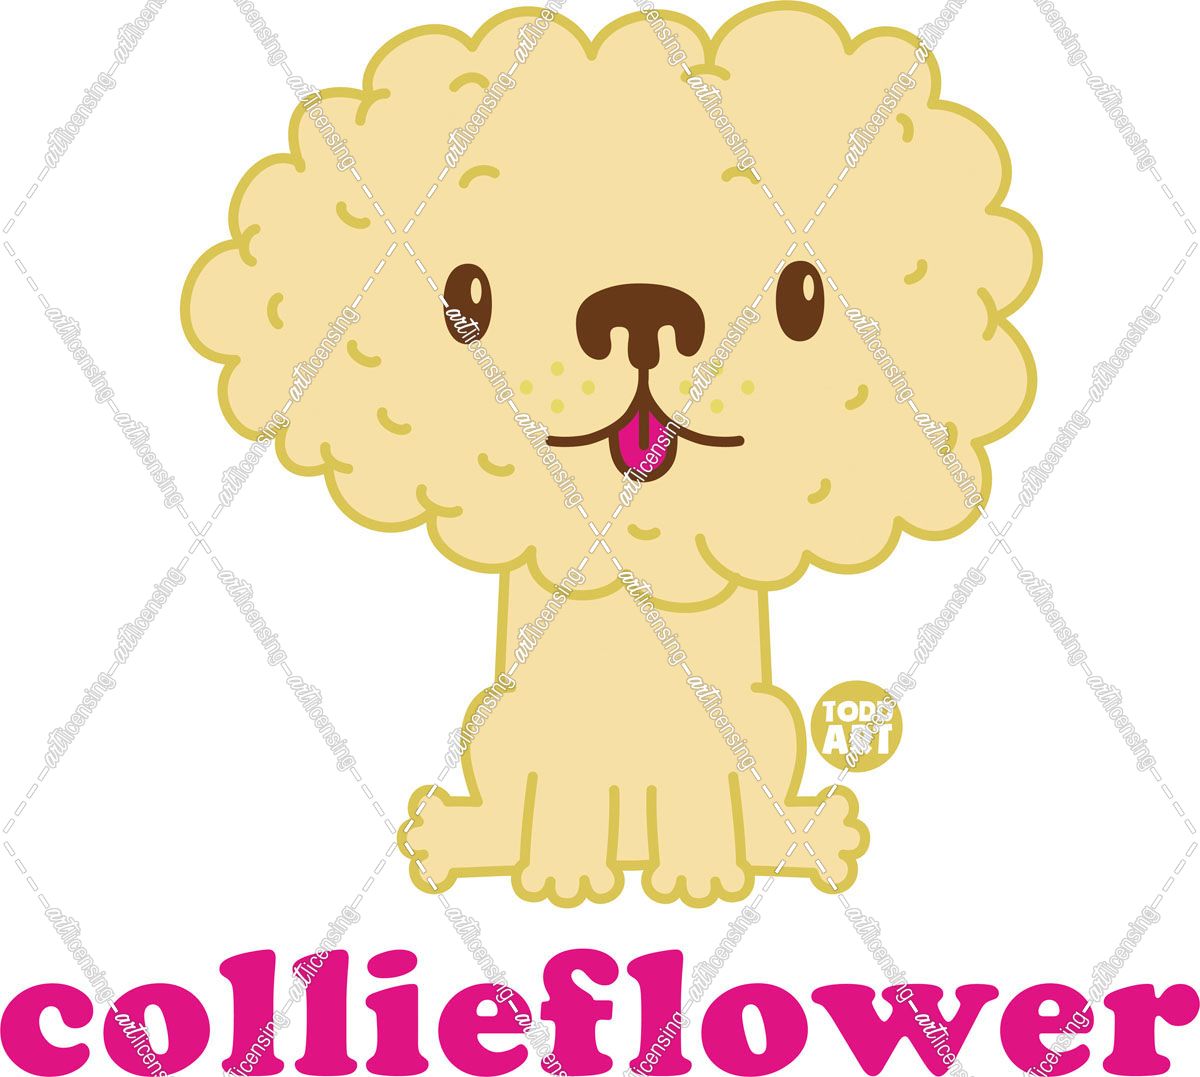 Collieflower